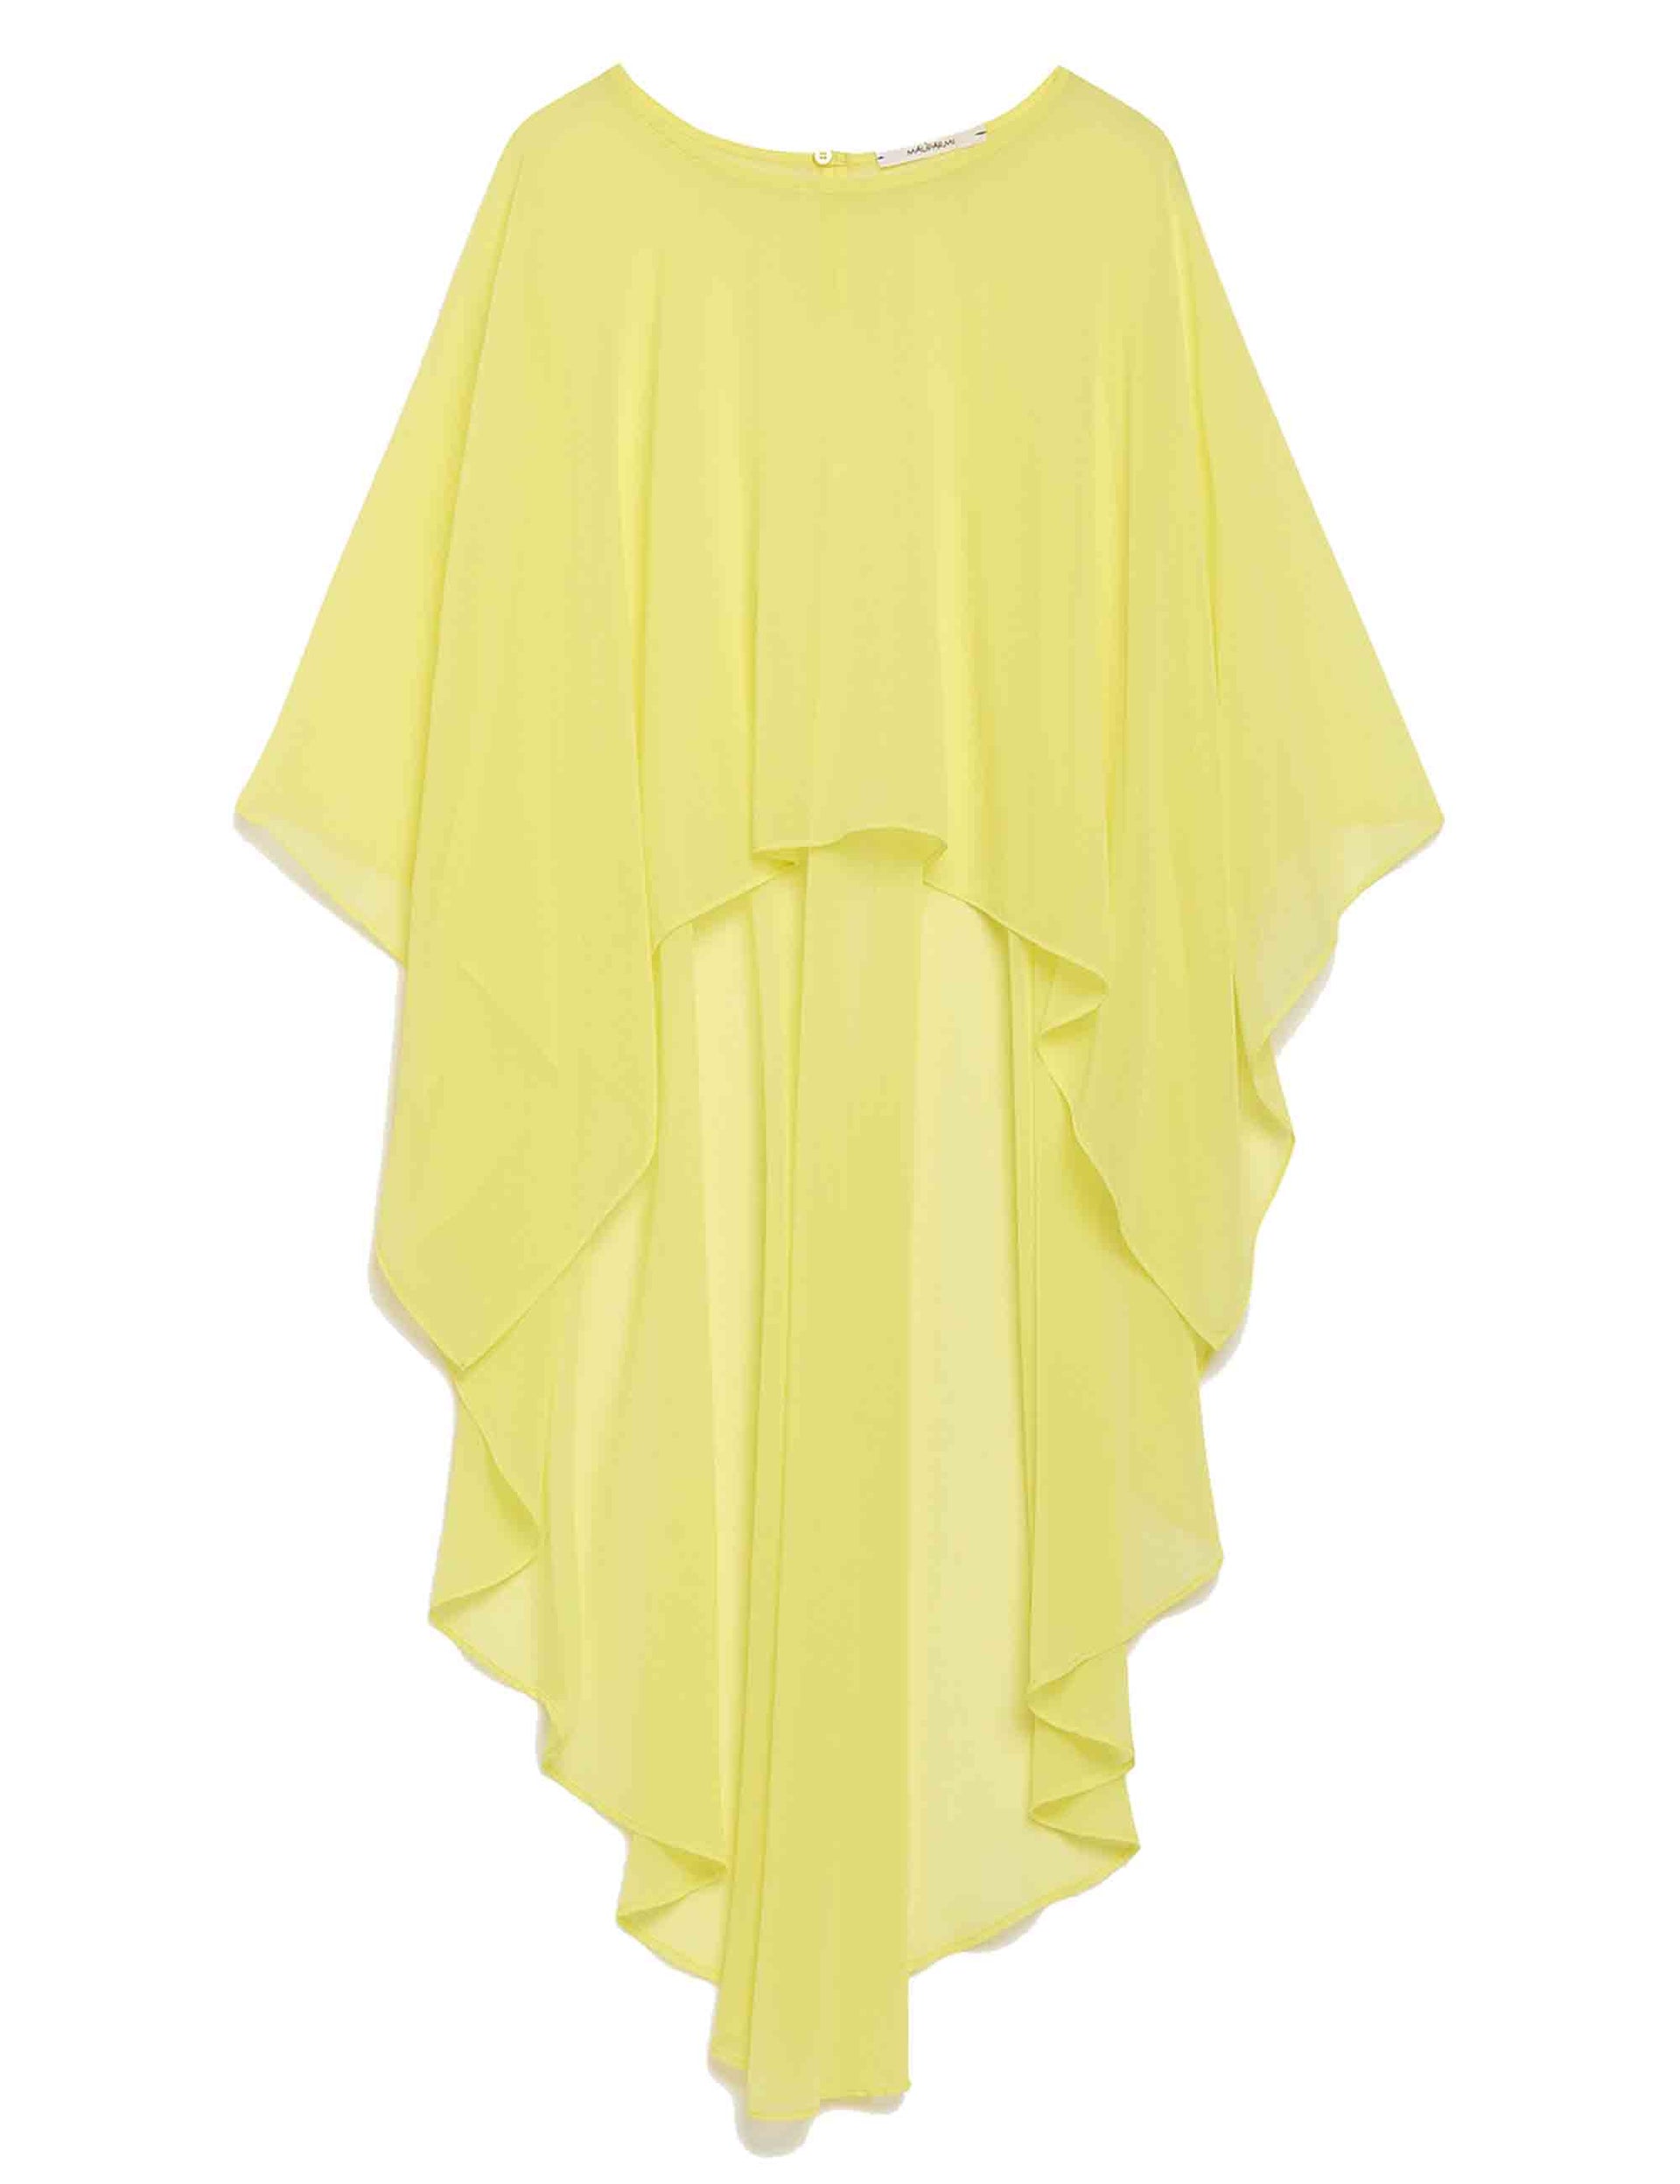 Women's capes in yellow chiffon